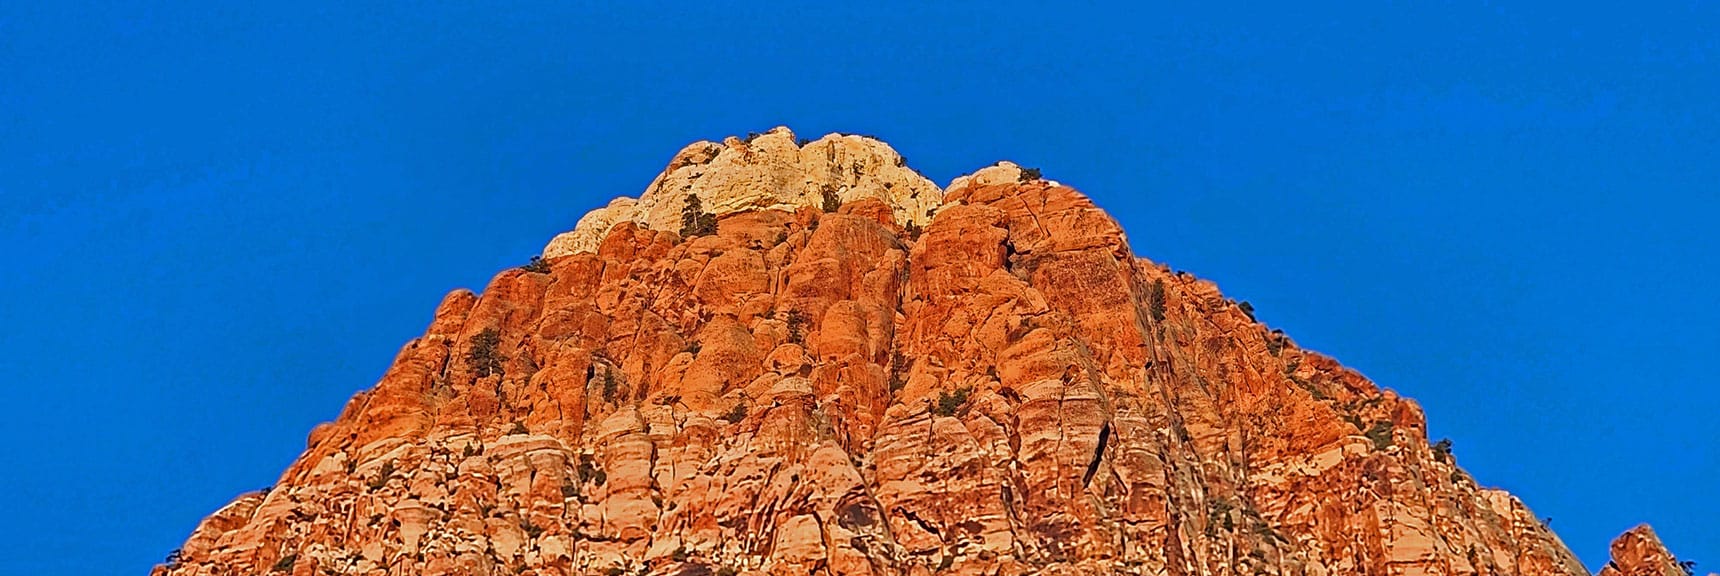 Close-up of Rainbow Mt. Summit | Knoll Trail | Red Rock Canyon National Conservation Area, Nevada | David Smith | LasVegasAreaTrails.com